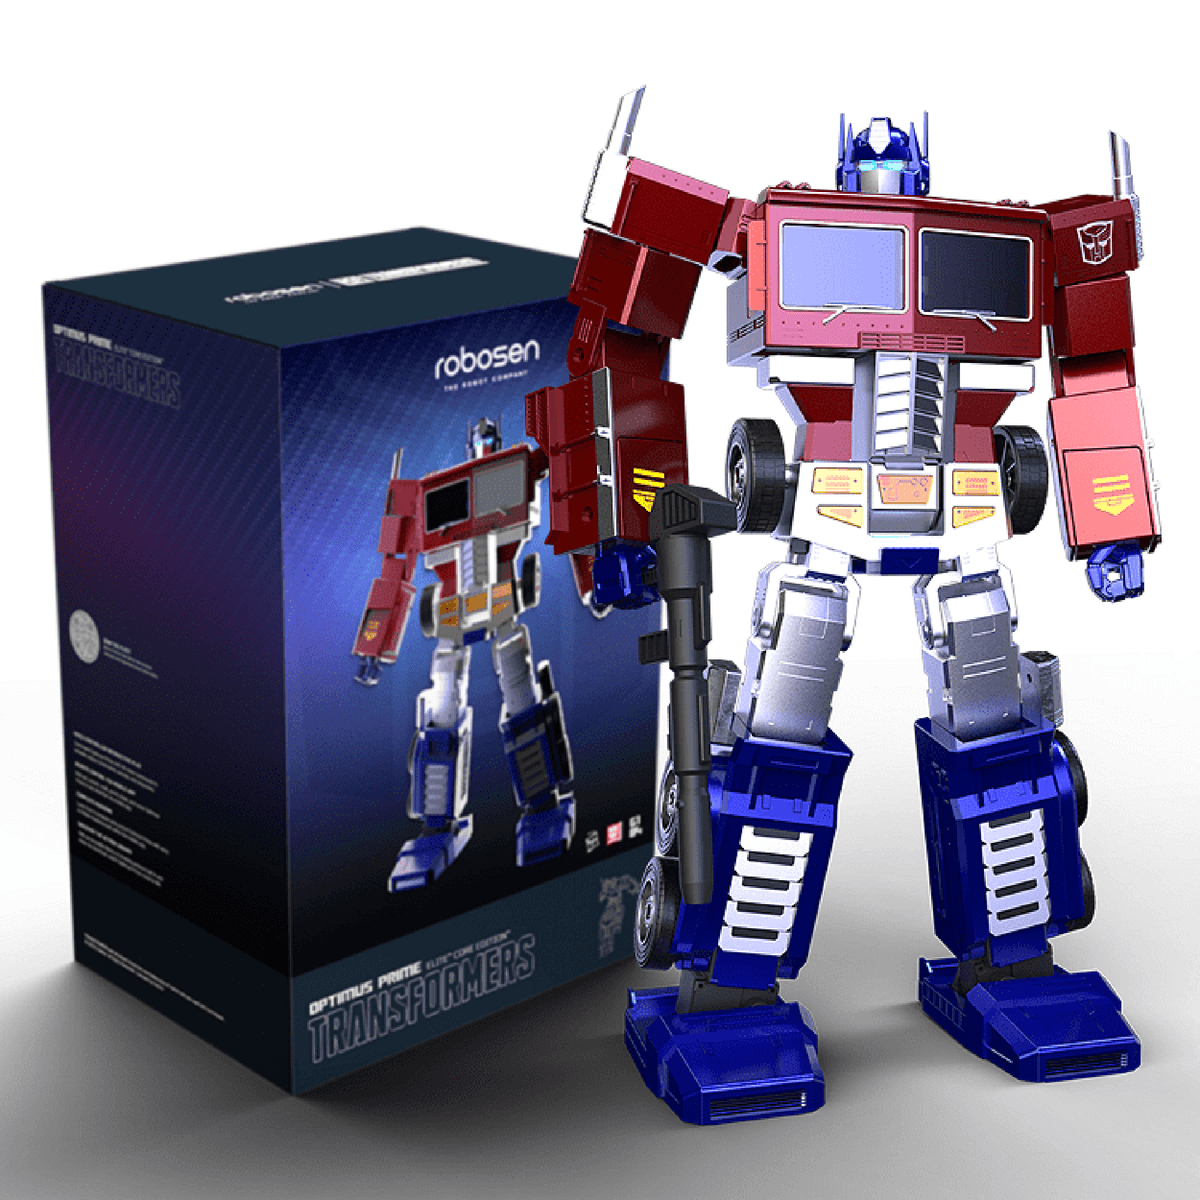 Transformers Optimus Prime Auto-Converting Robot (Elite) by Robosen –  Hasbro Pulse - UK